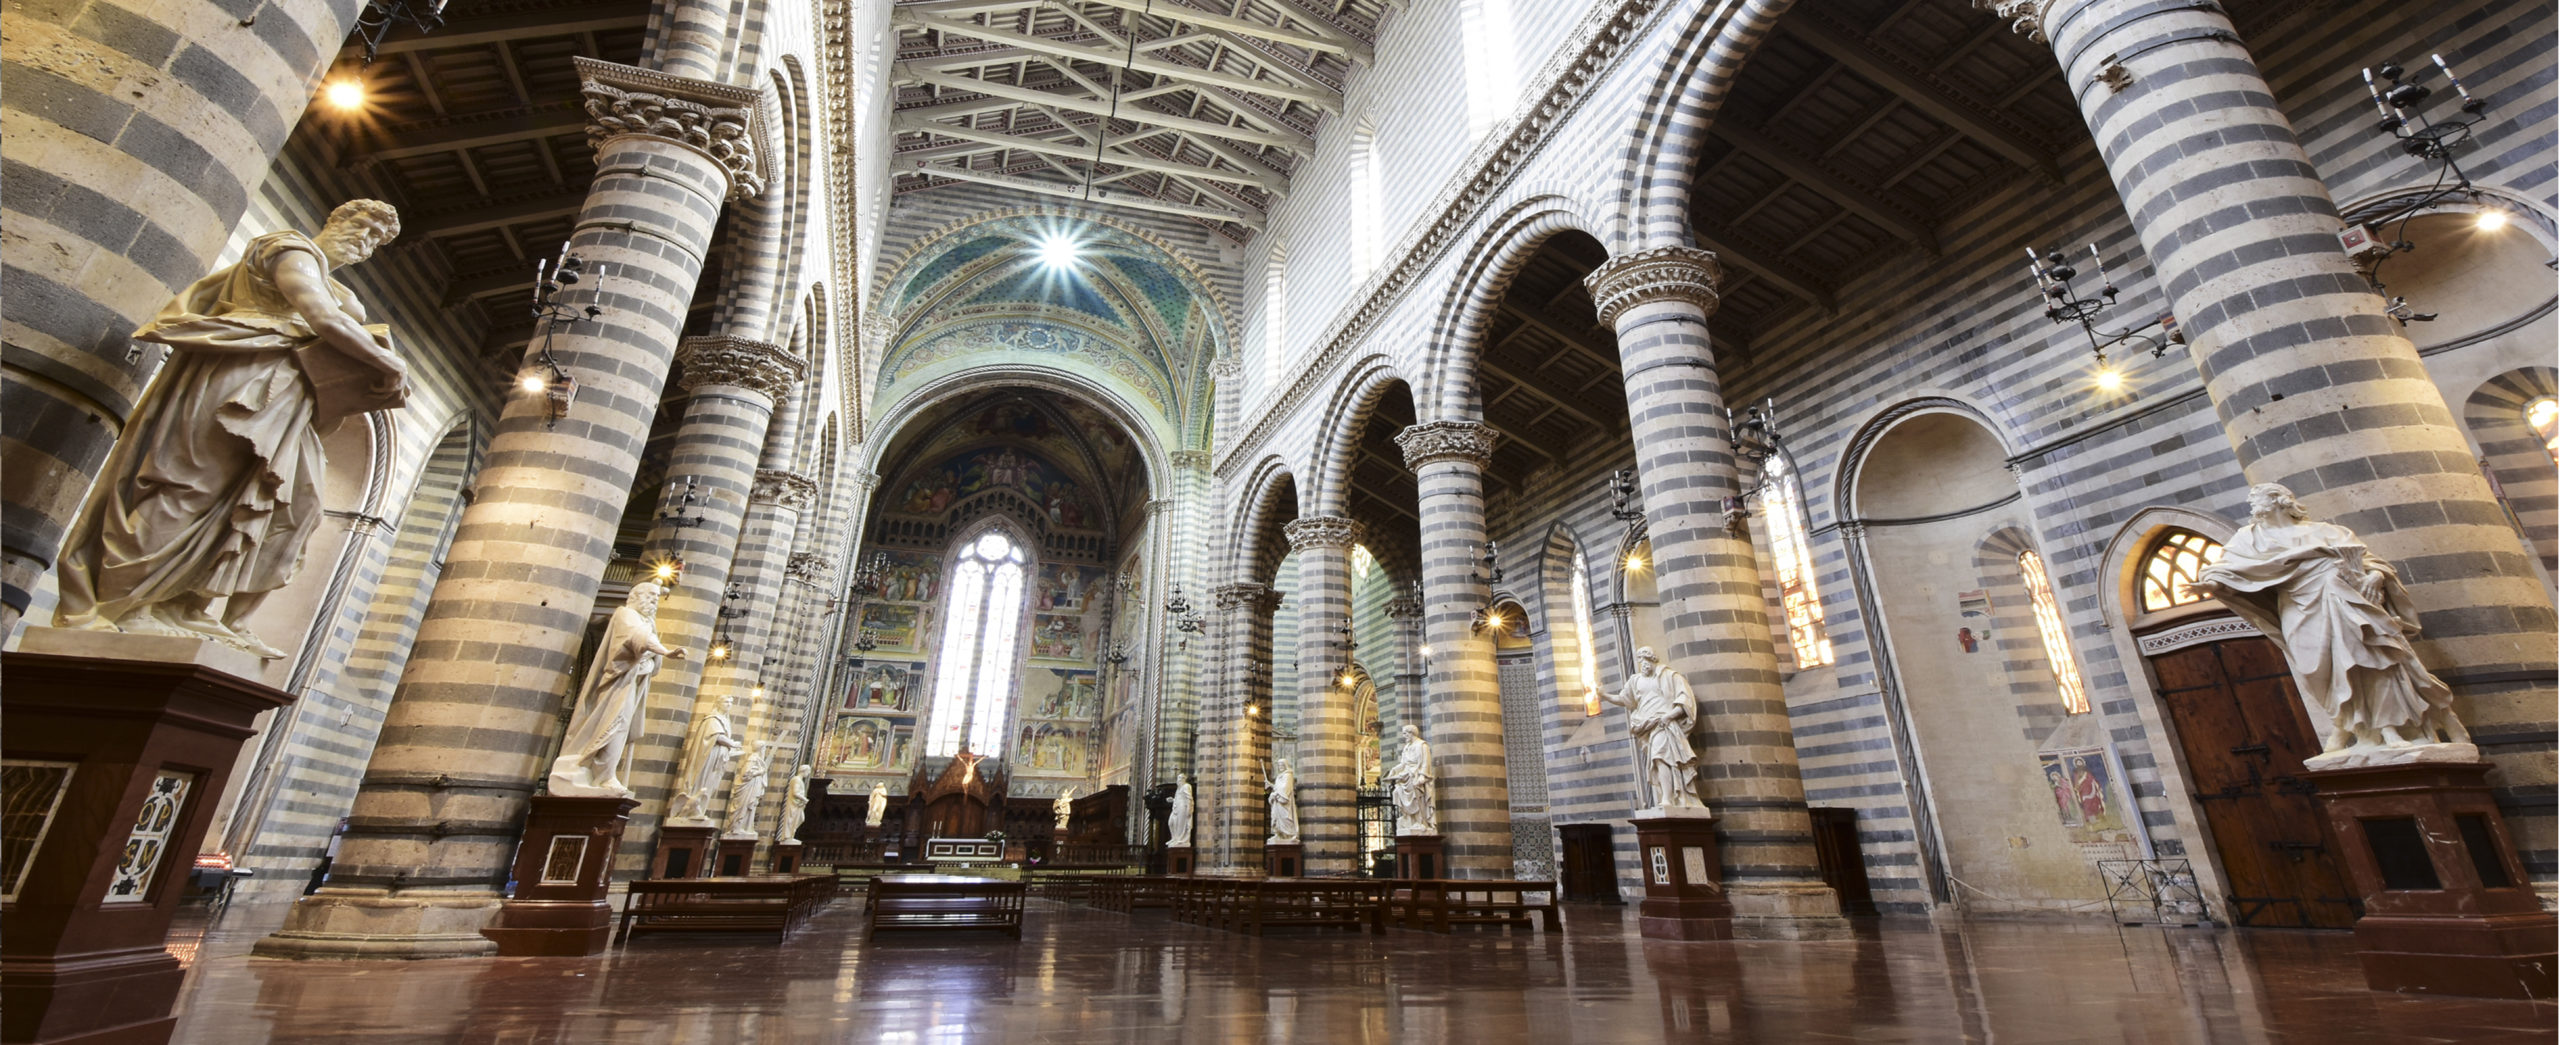 Orvieto - veduta interna del Duomo